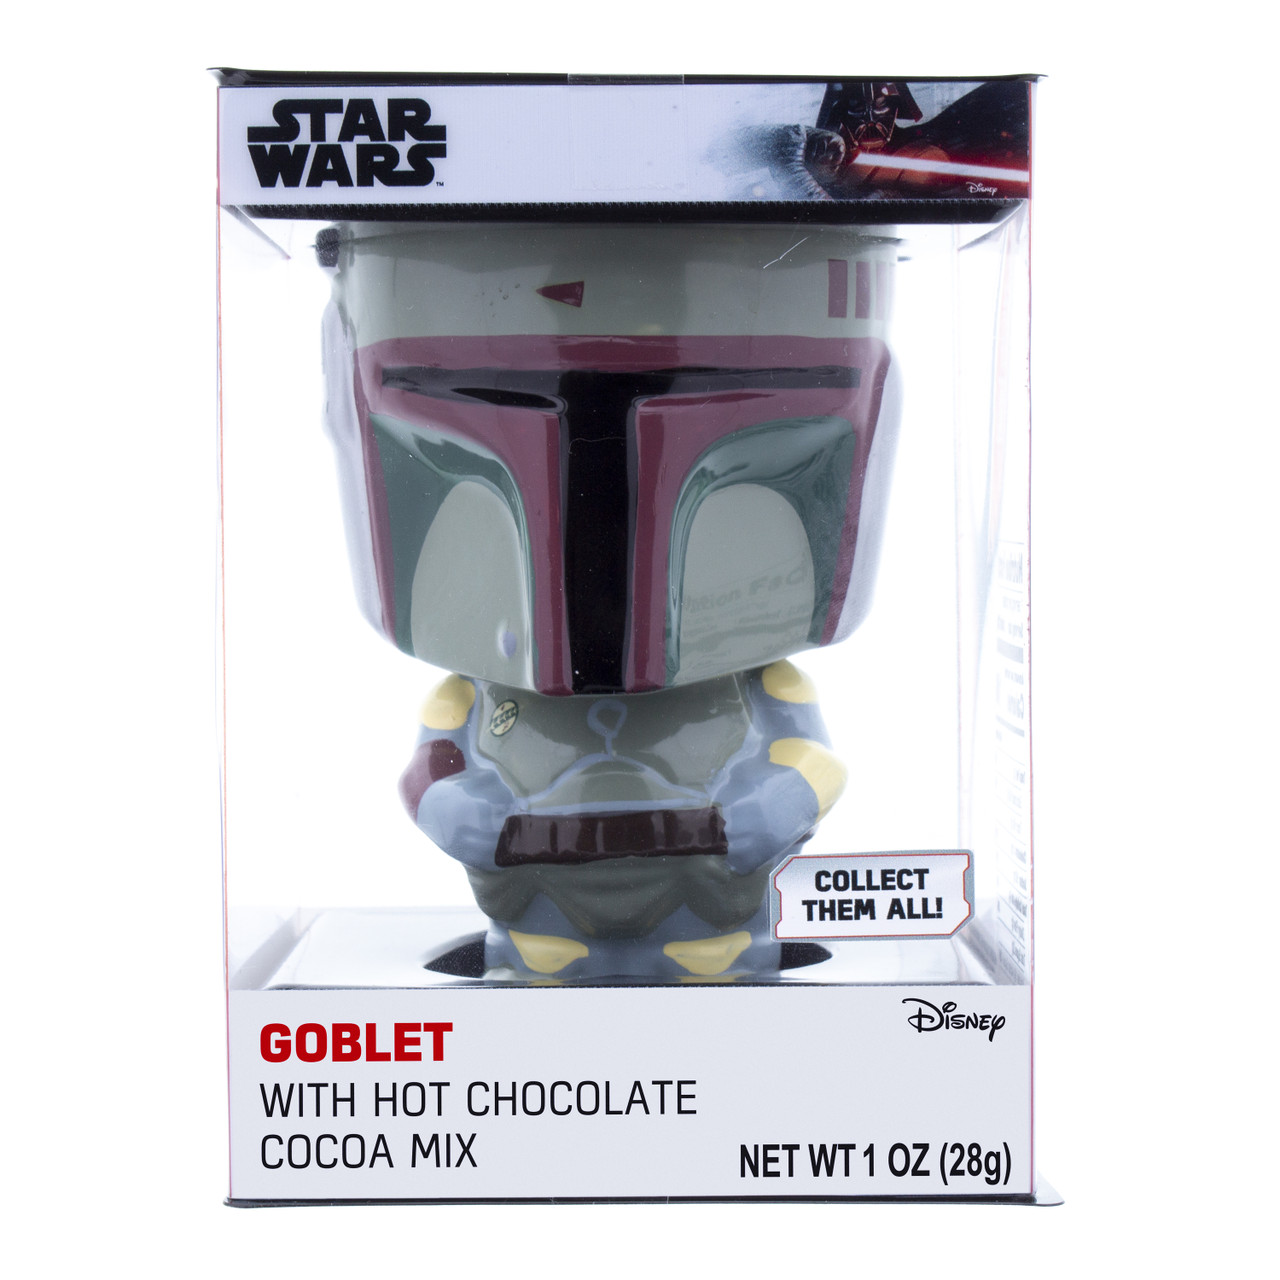 Disney Star Wars Darth Vader Ceramic Collectible Goblet + Chocolate Fudge  Cocoa Mix Set!